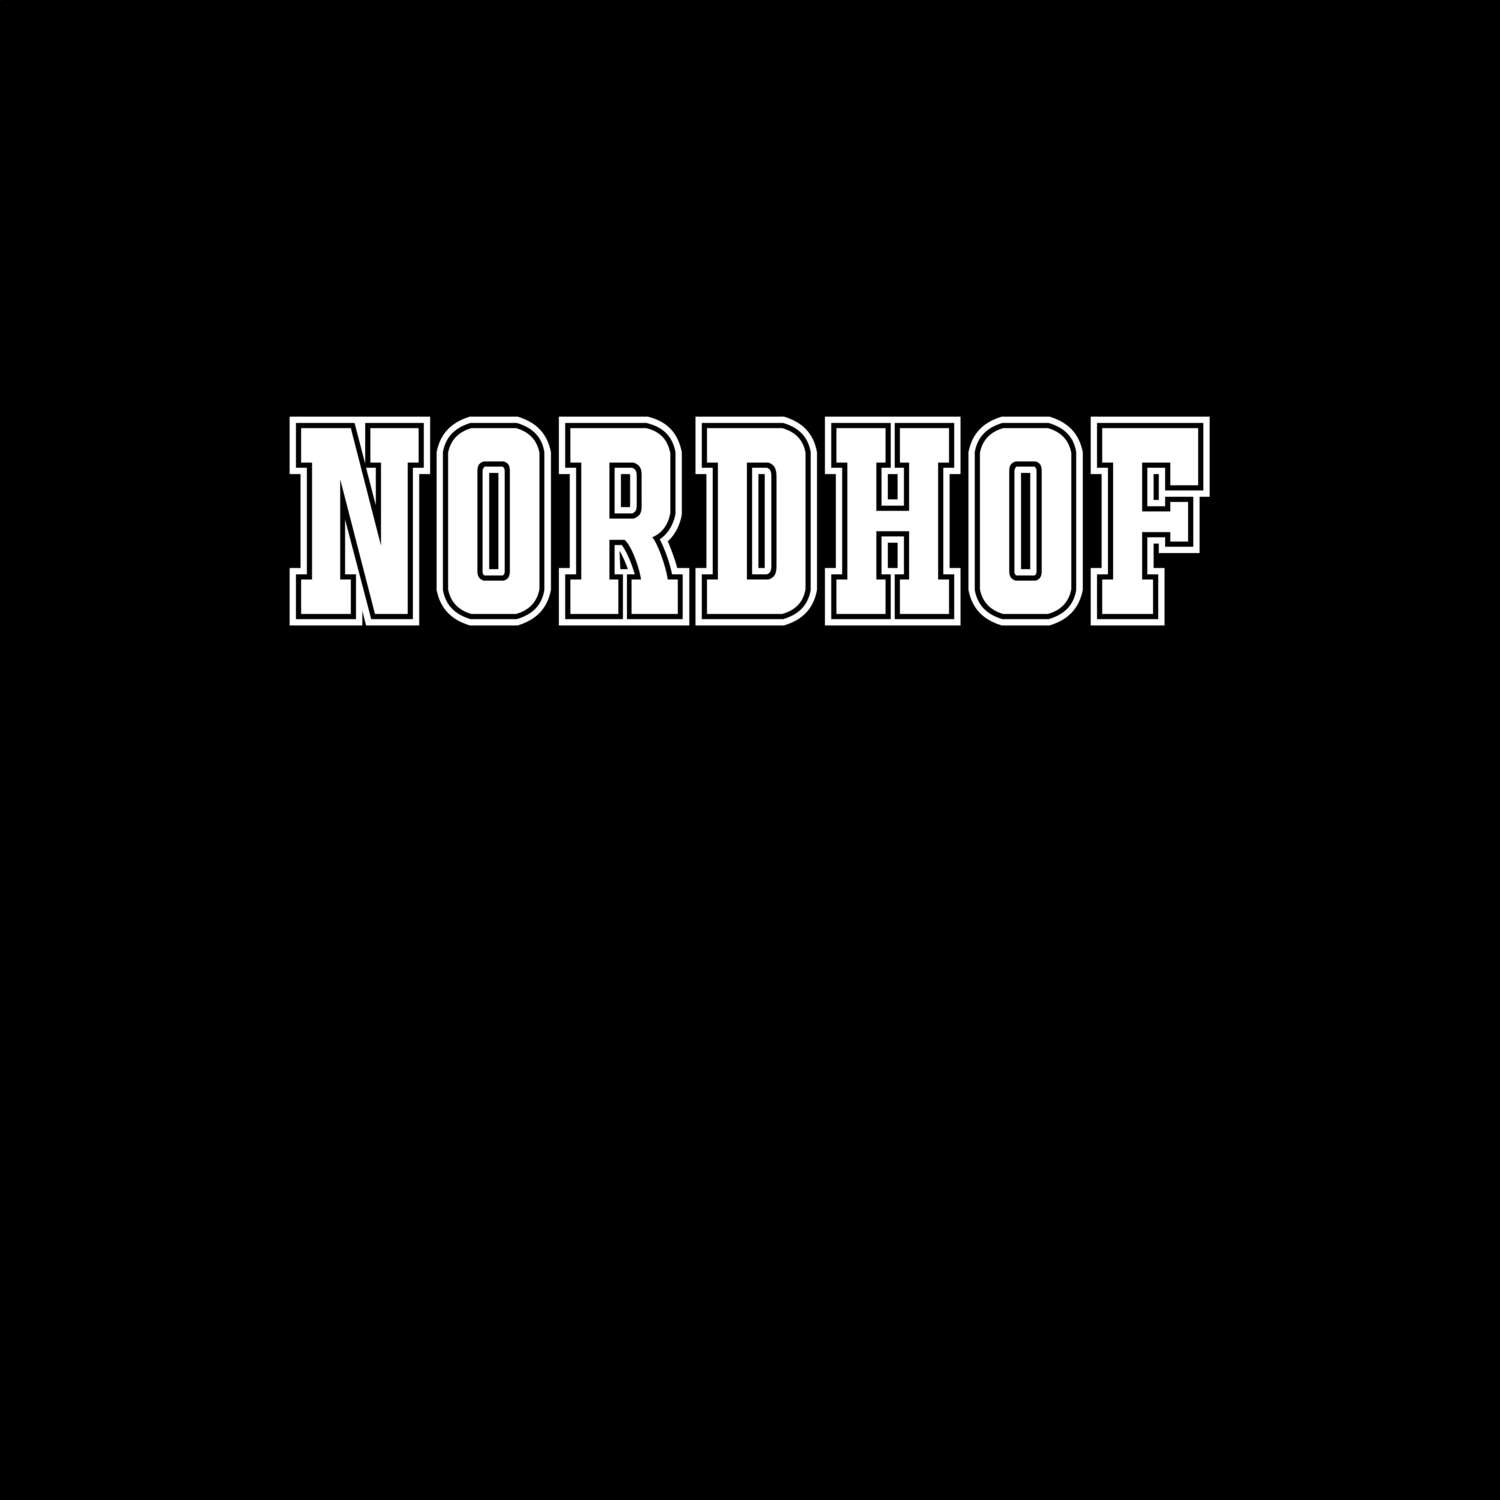 Nordhof T-Shirt »Classic«